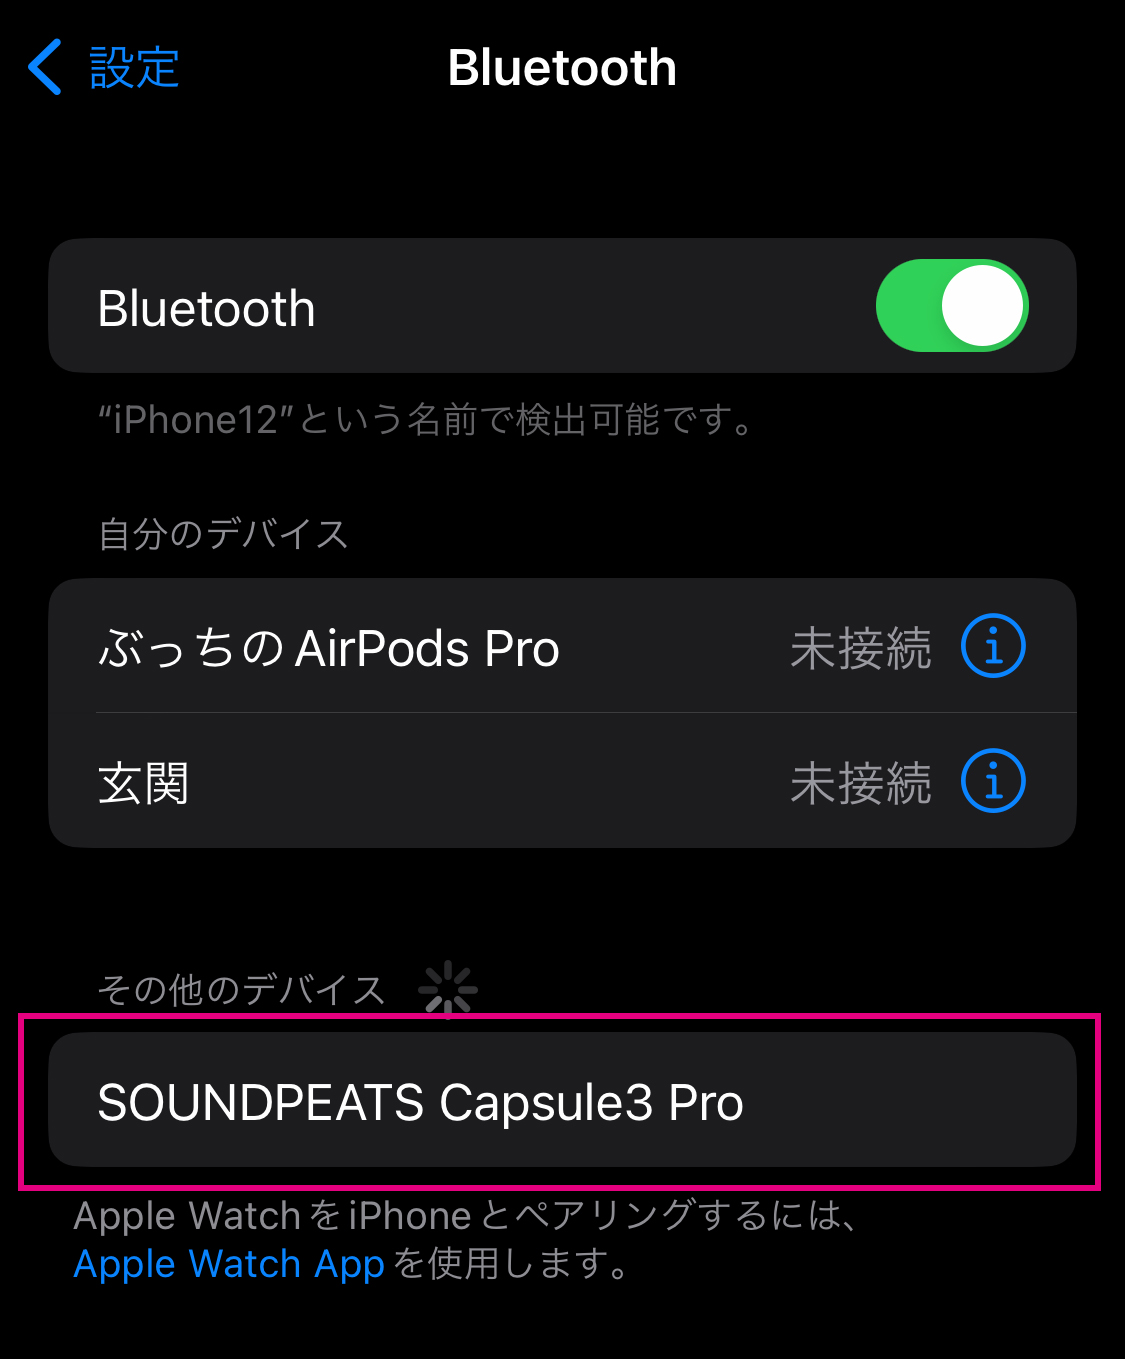 Bluetooth設定画面から「SOUNDPEATS Capsule3 Pro」を選択